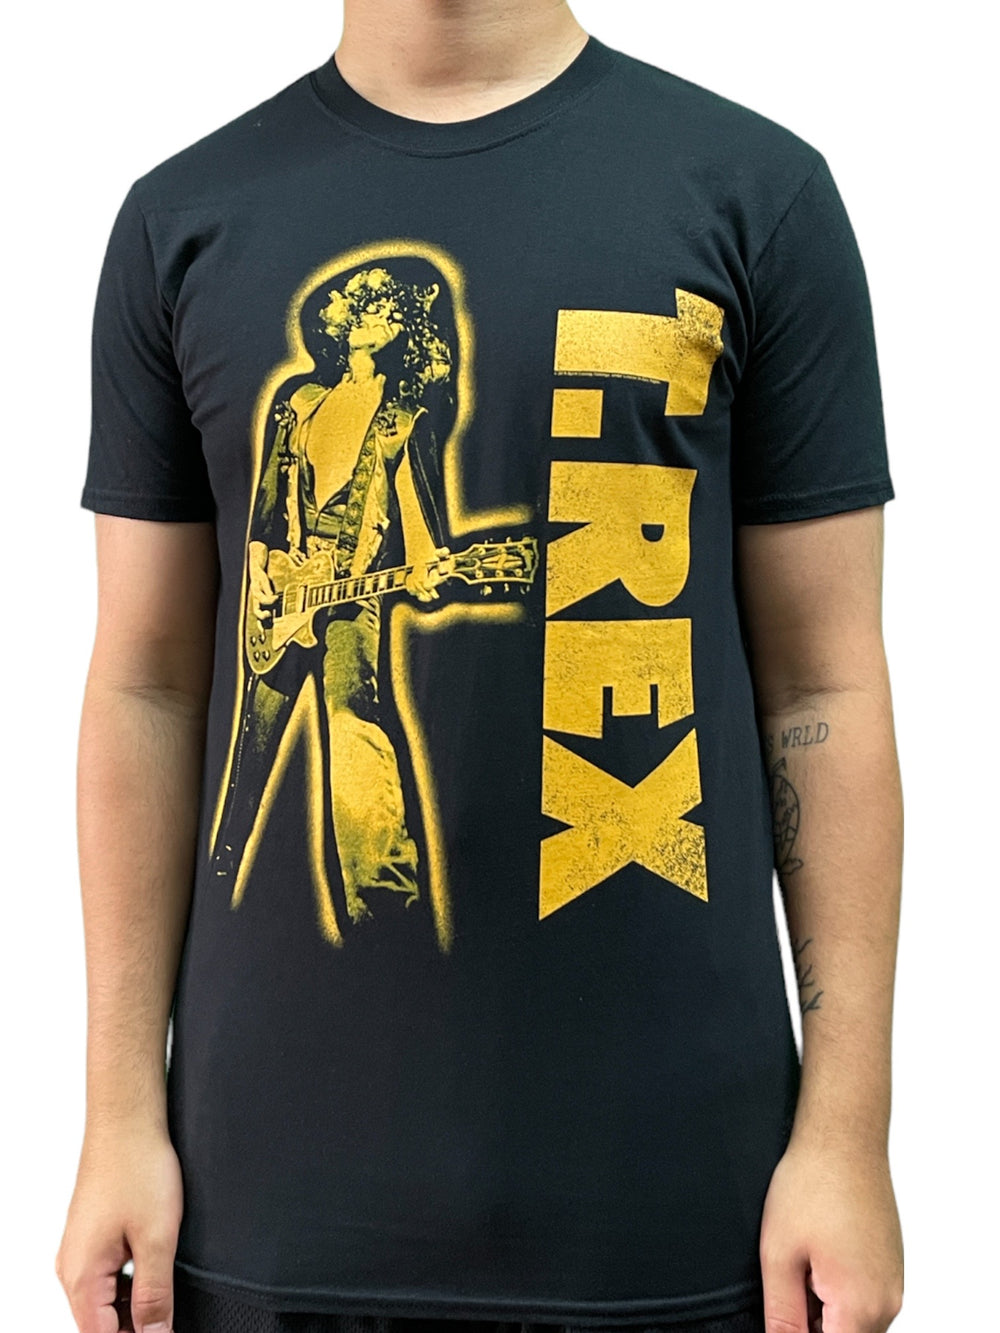 T.REX - Marc Bolan GUITAR Unisex Official T Shirt Various Sizes NEW